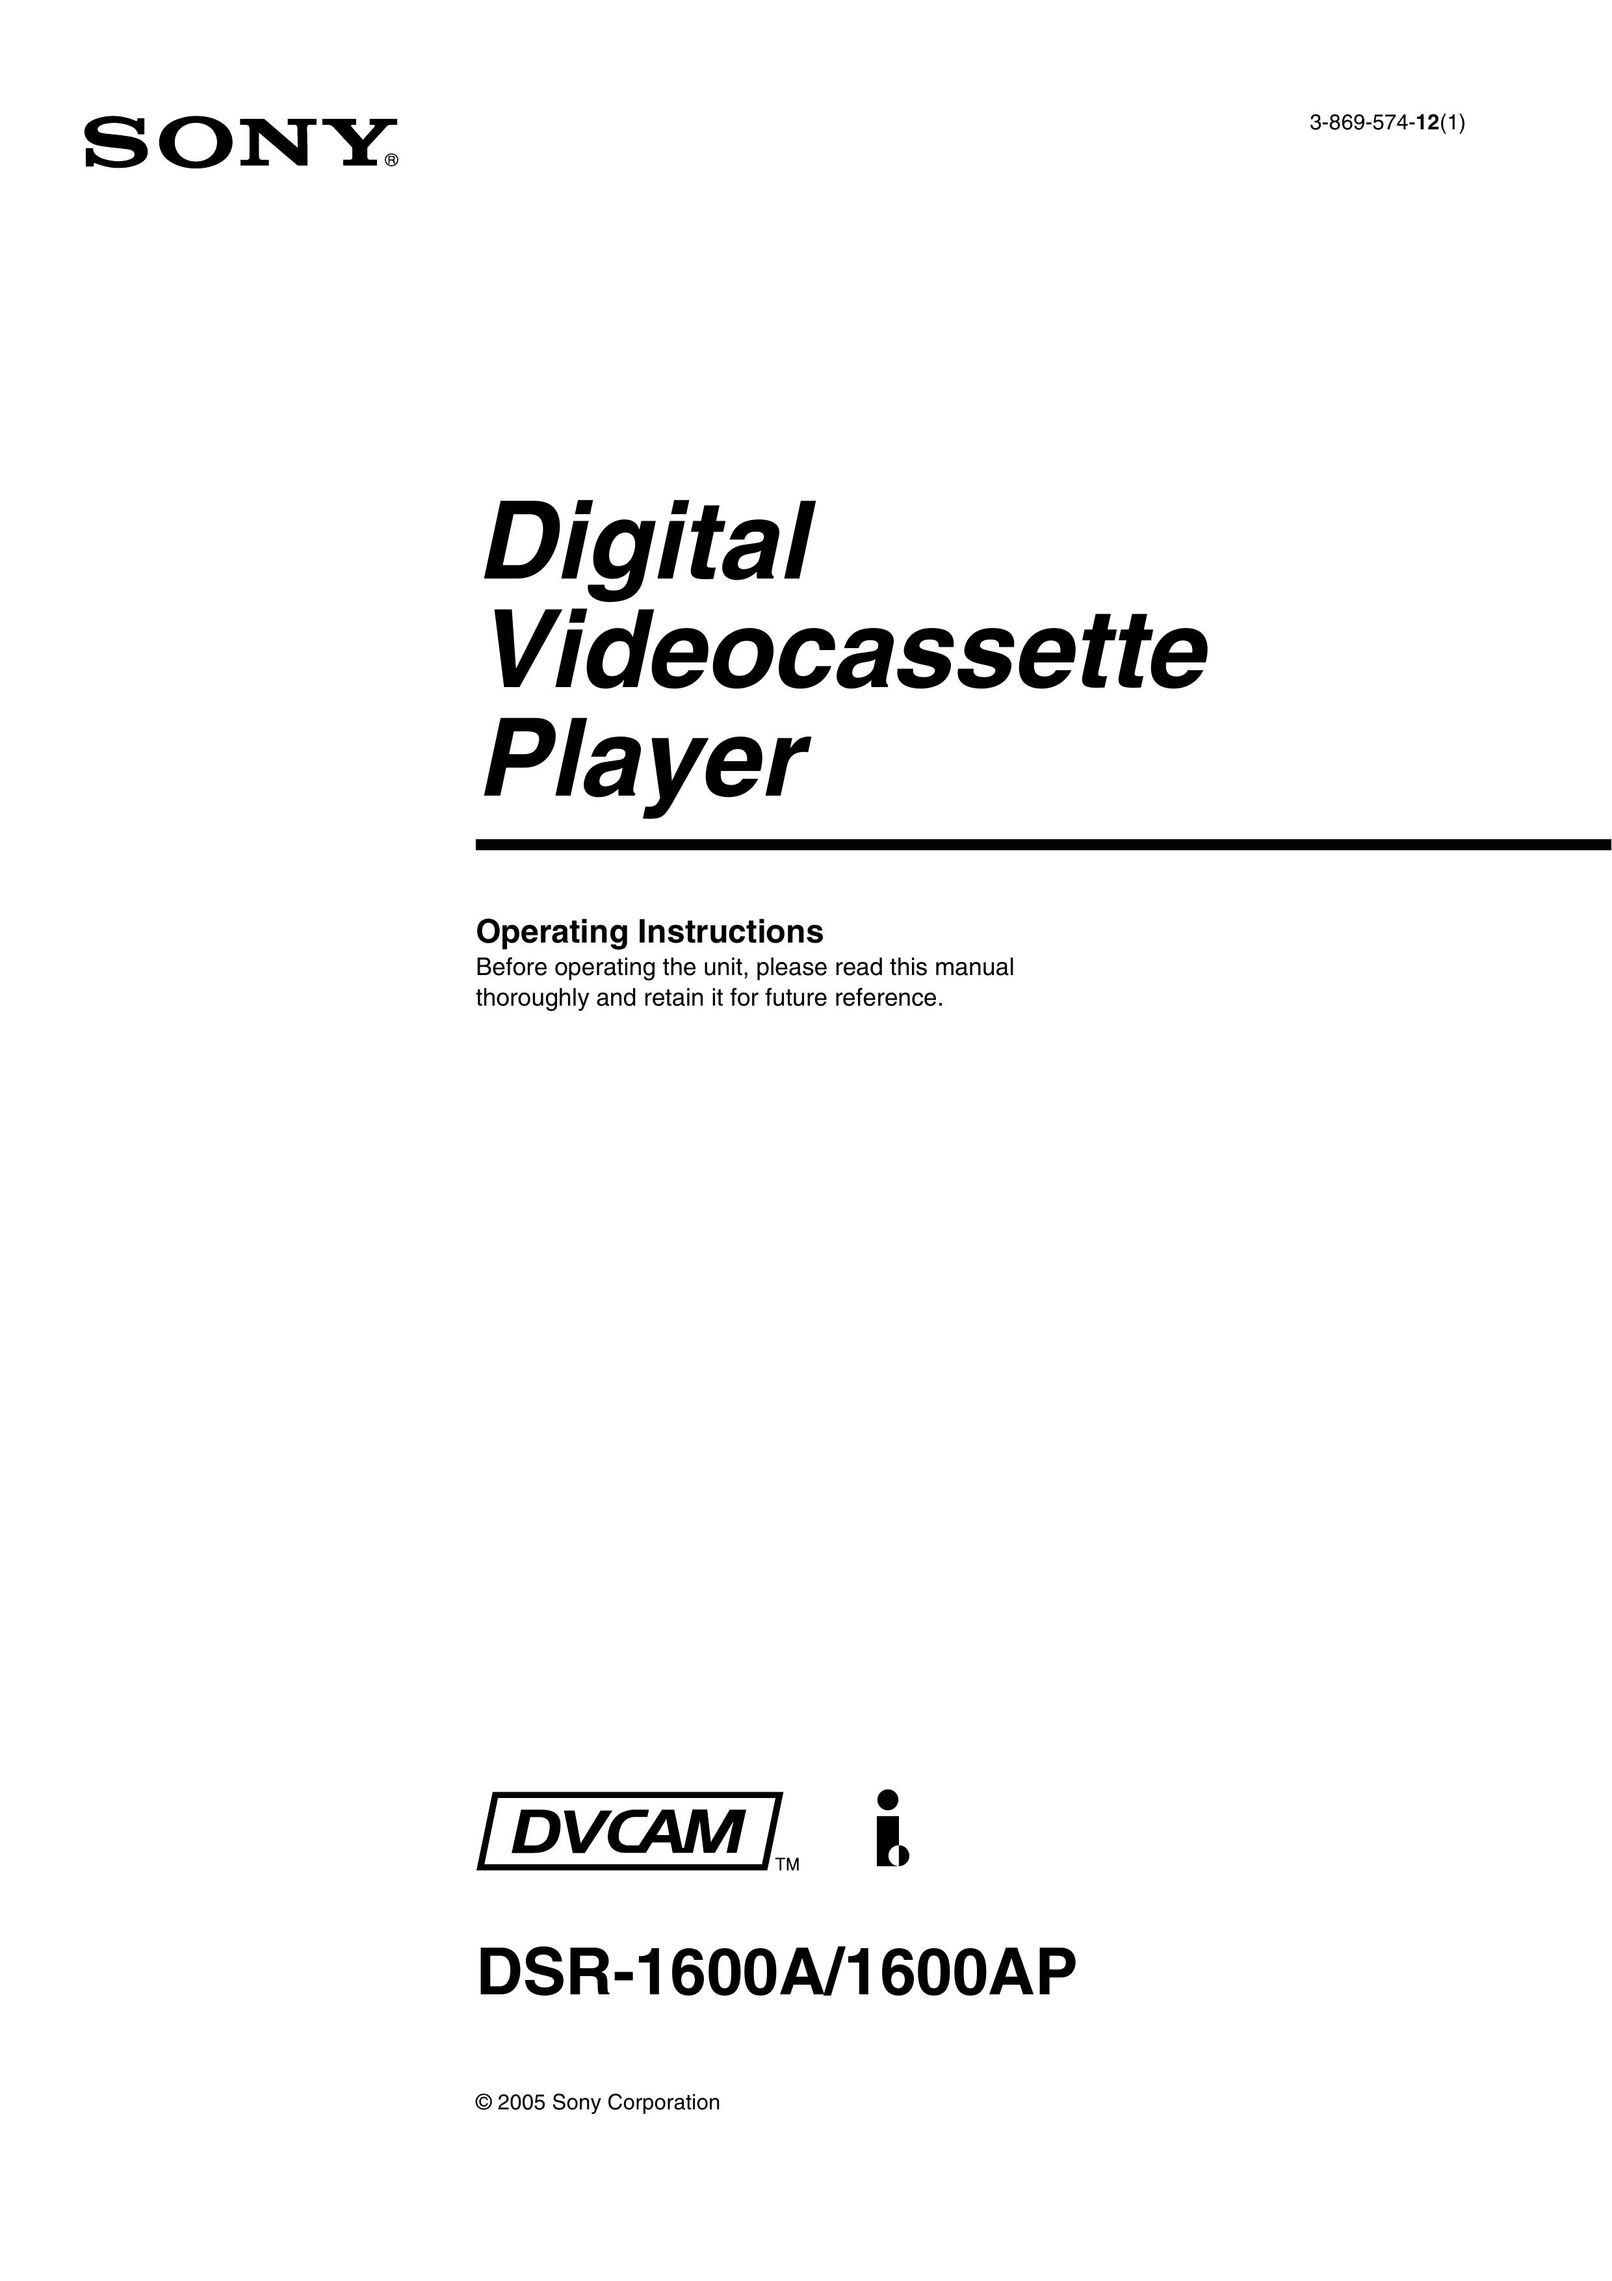 Sony DSR-1600AP VCR User Manual